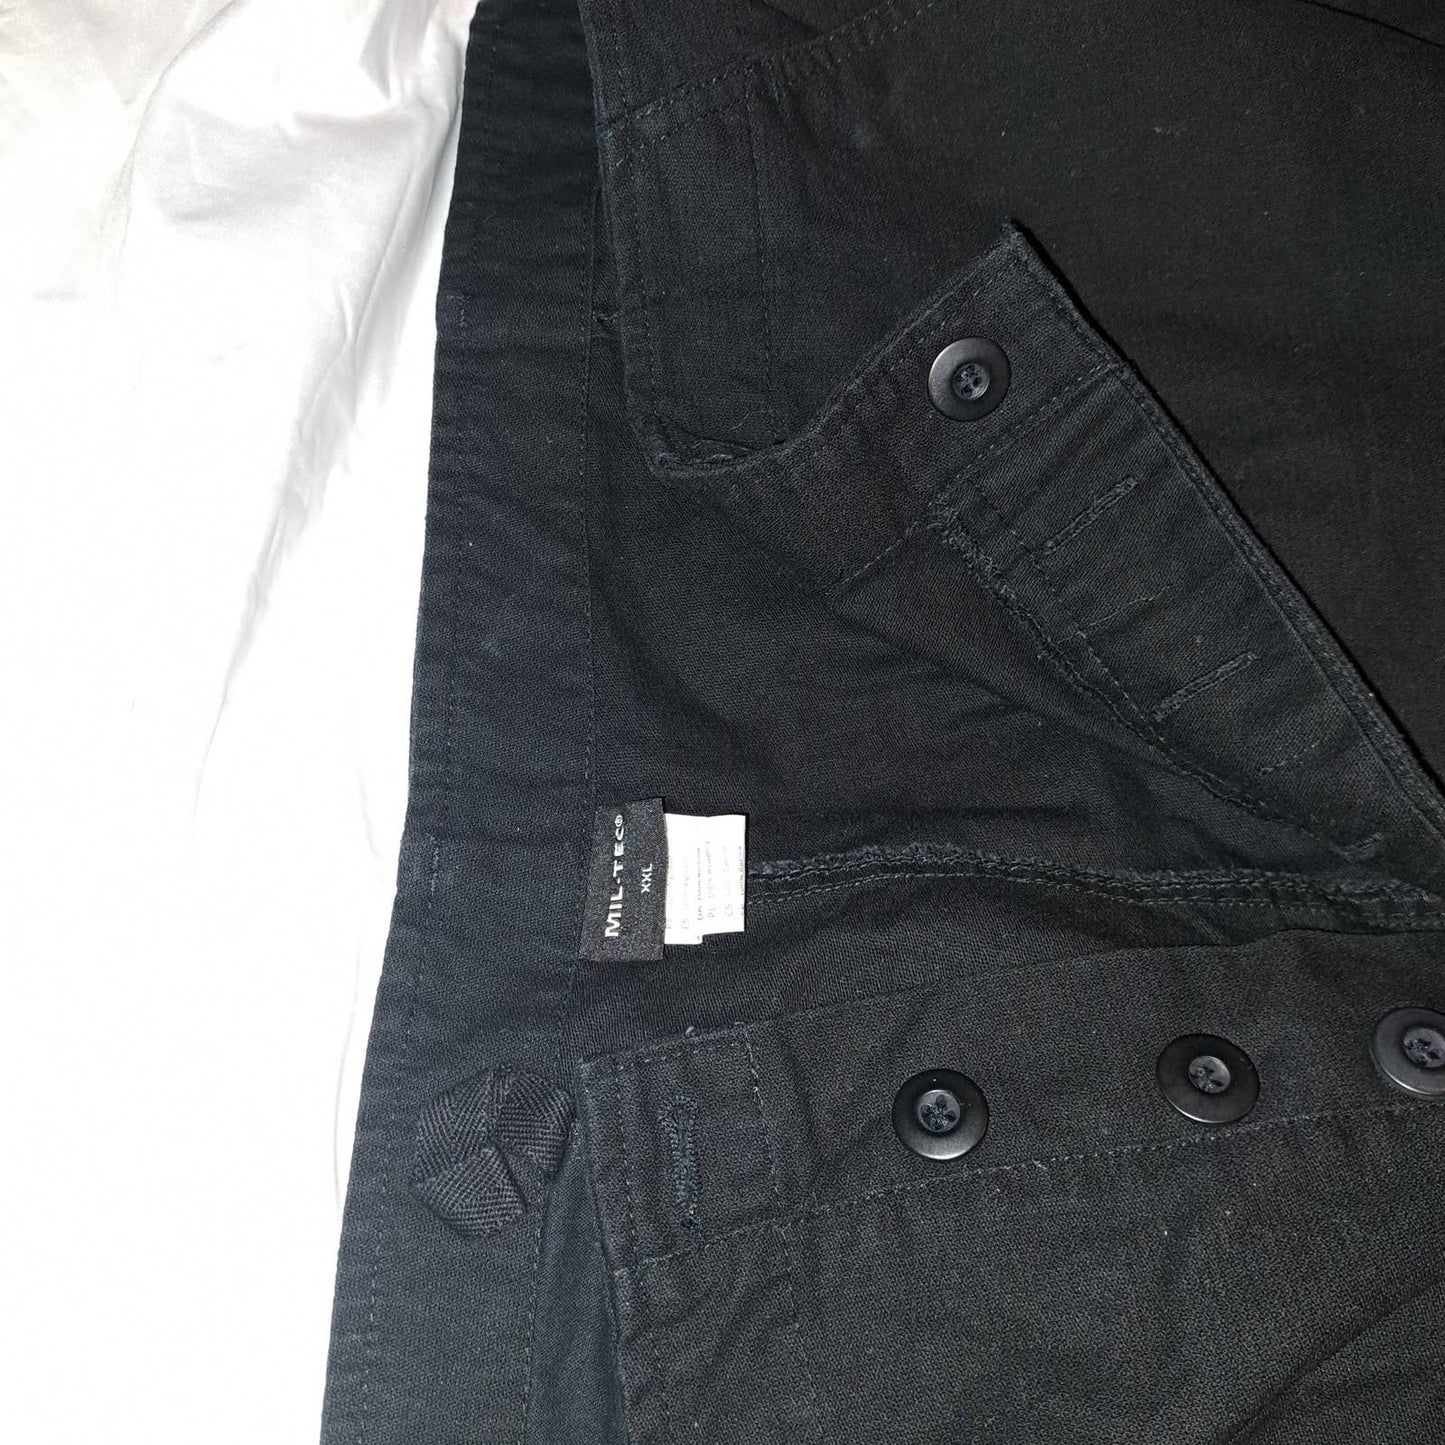 New Mens XXL Army style black prewashed Moleskin Bermuda military shorts